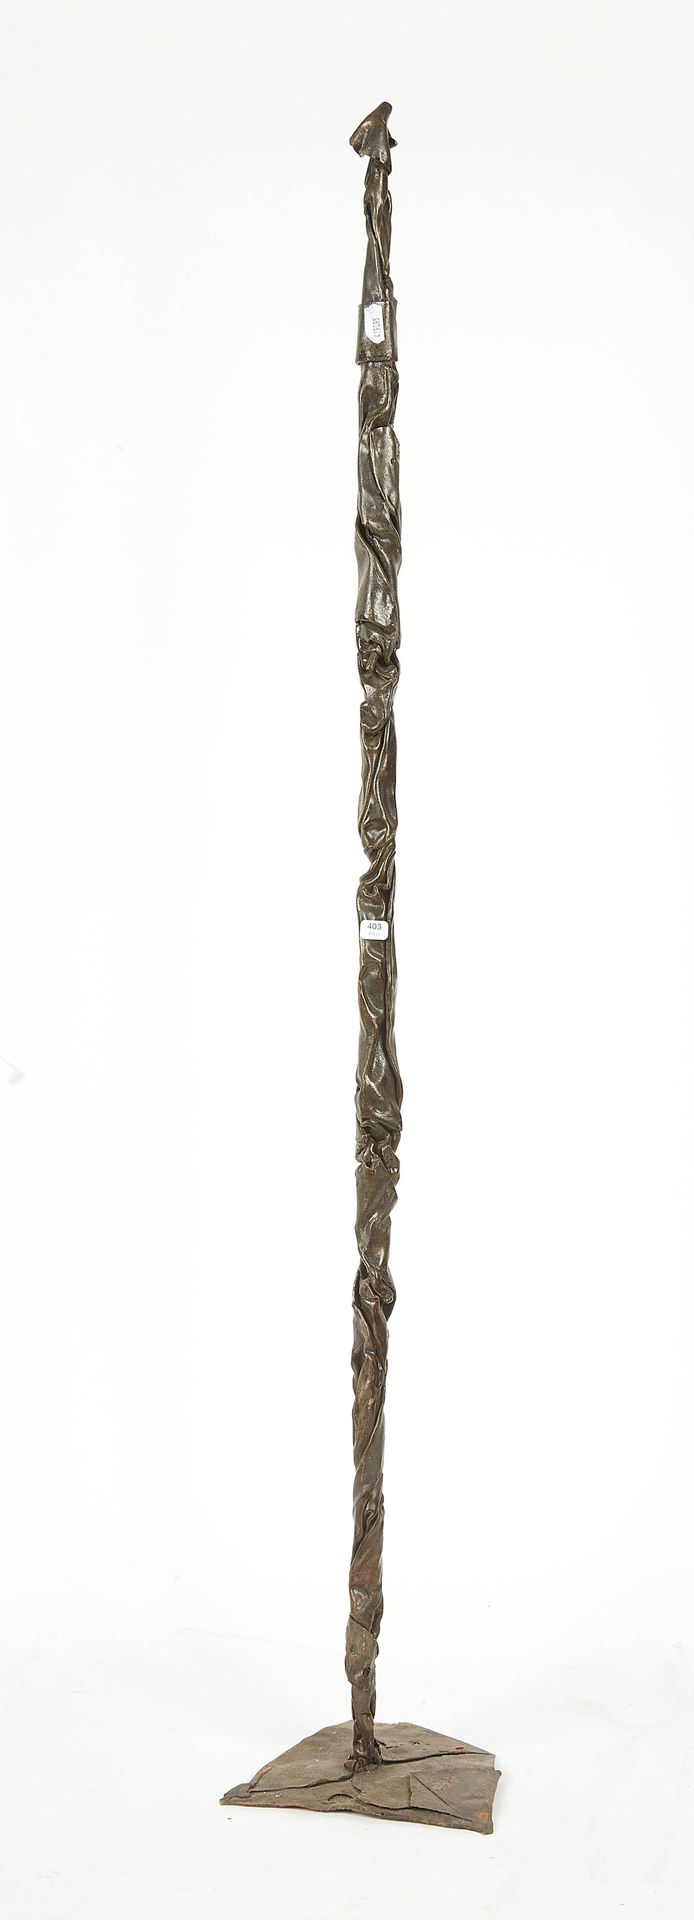 Null Anonym. Skulptur aus Metall. Höhe: 110 cm.